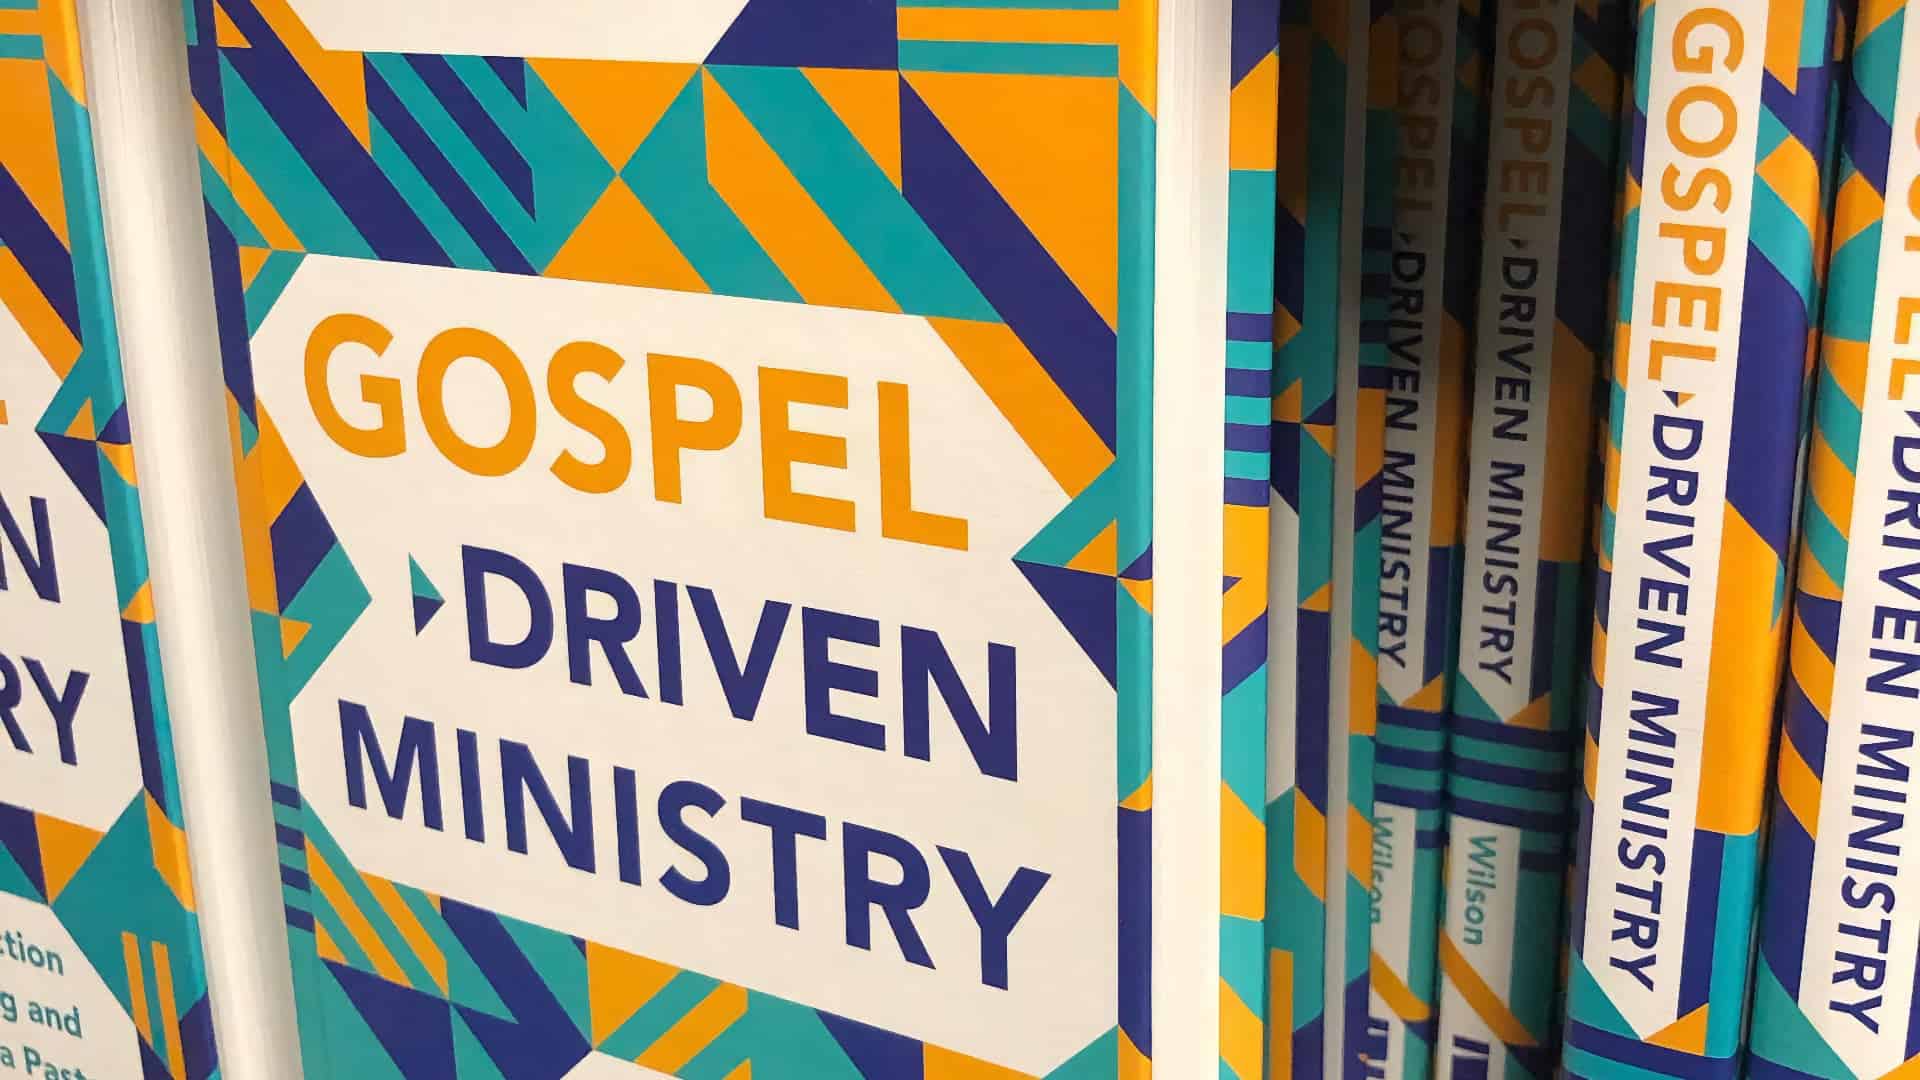 Gospel-Driven Ministry